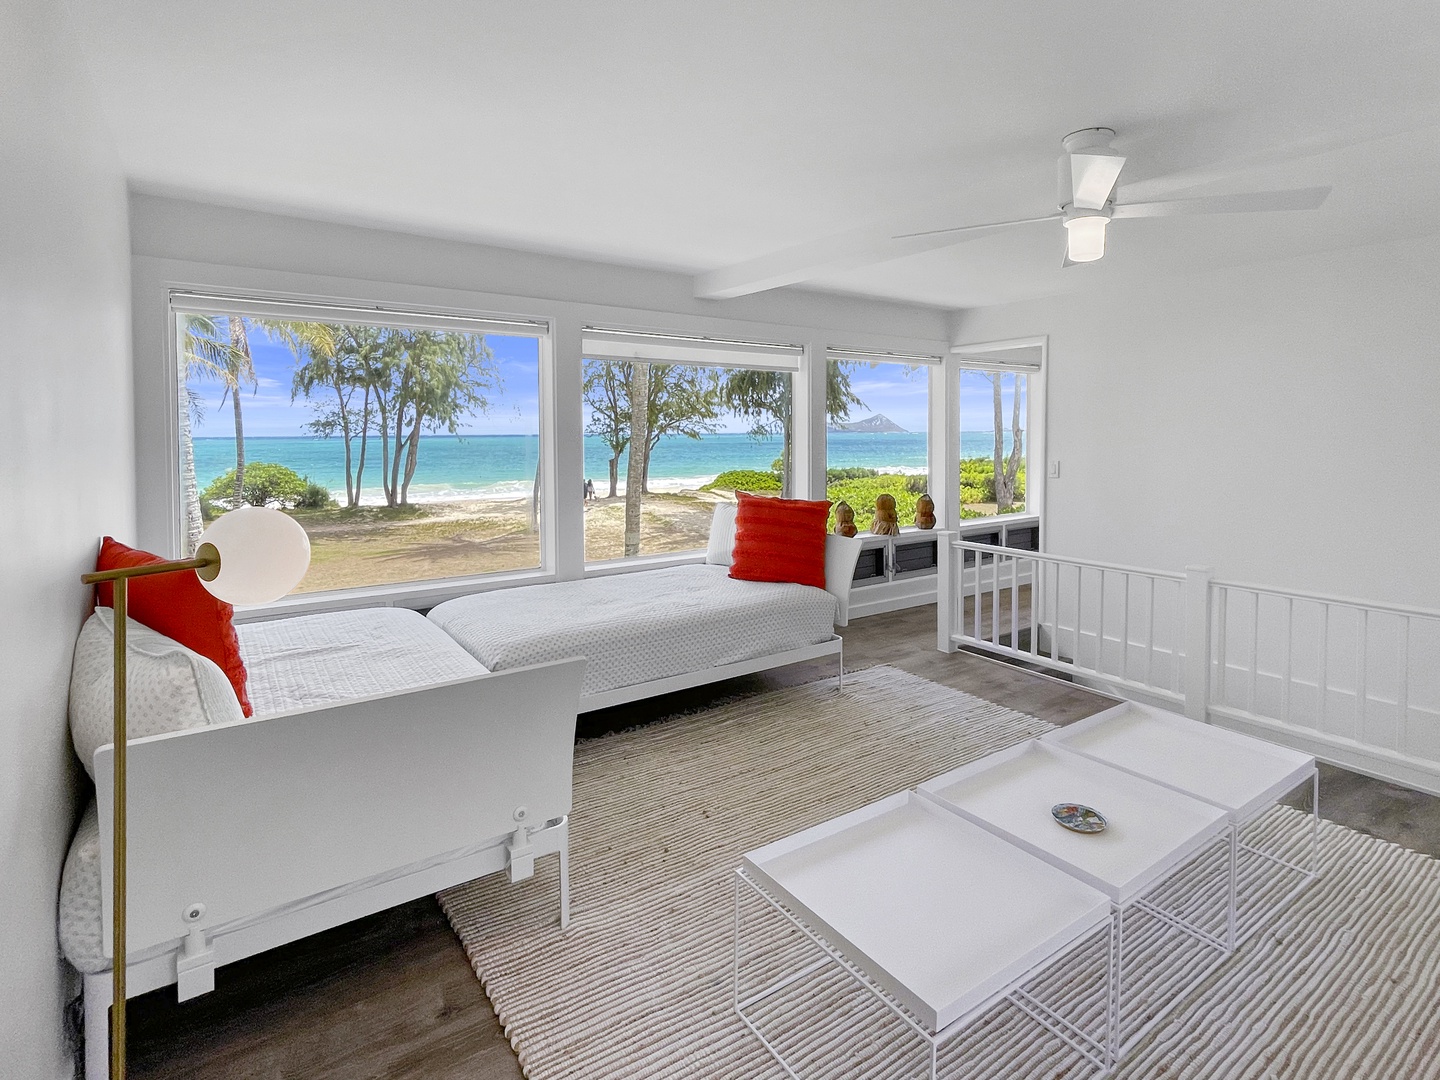 Waimanalo Vacation Rentals, Hale Waimanalo - Kids Heaven! 4 twin beds, half bath ensuite and amazing ocean views!